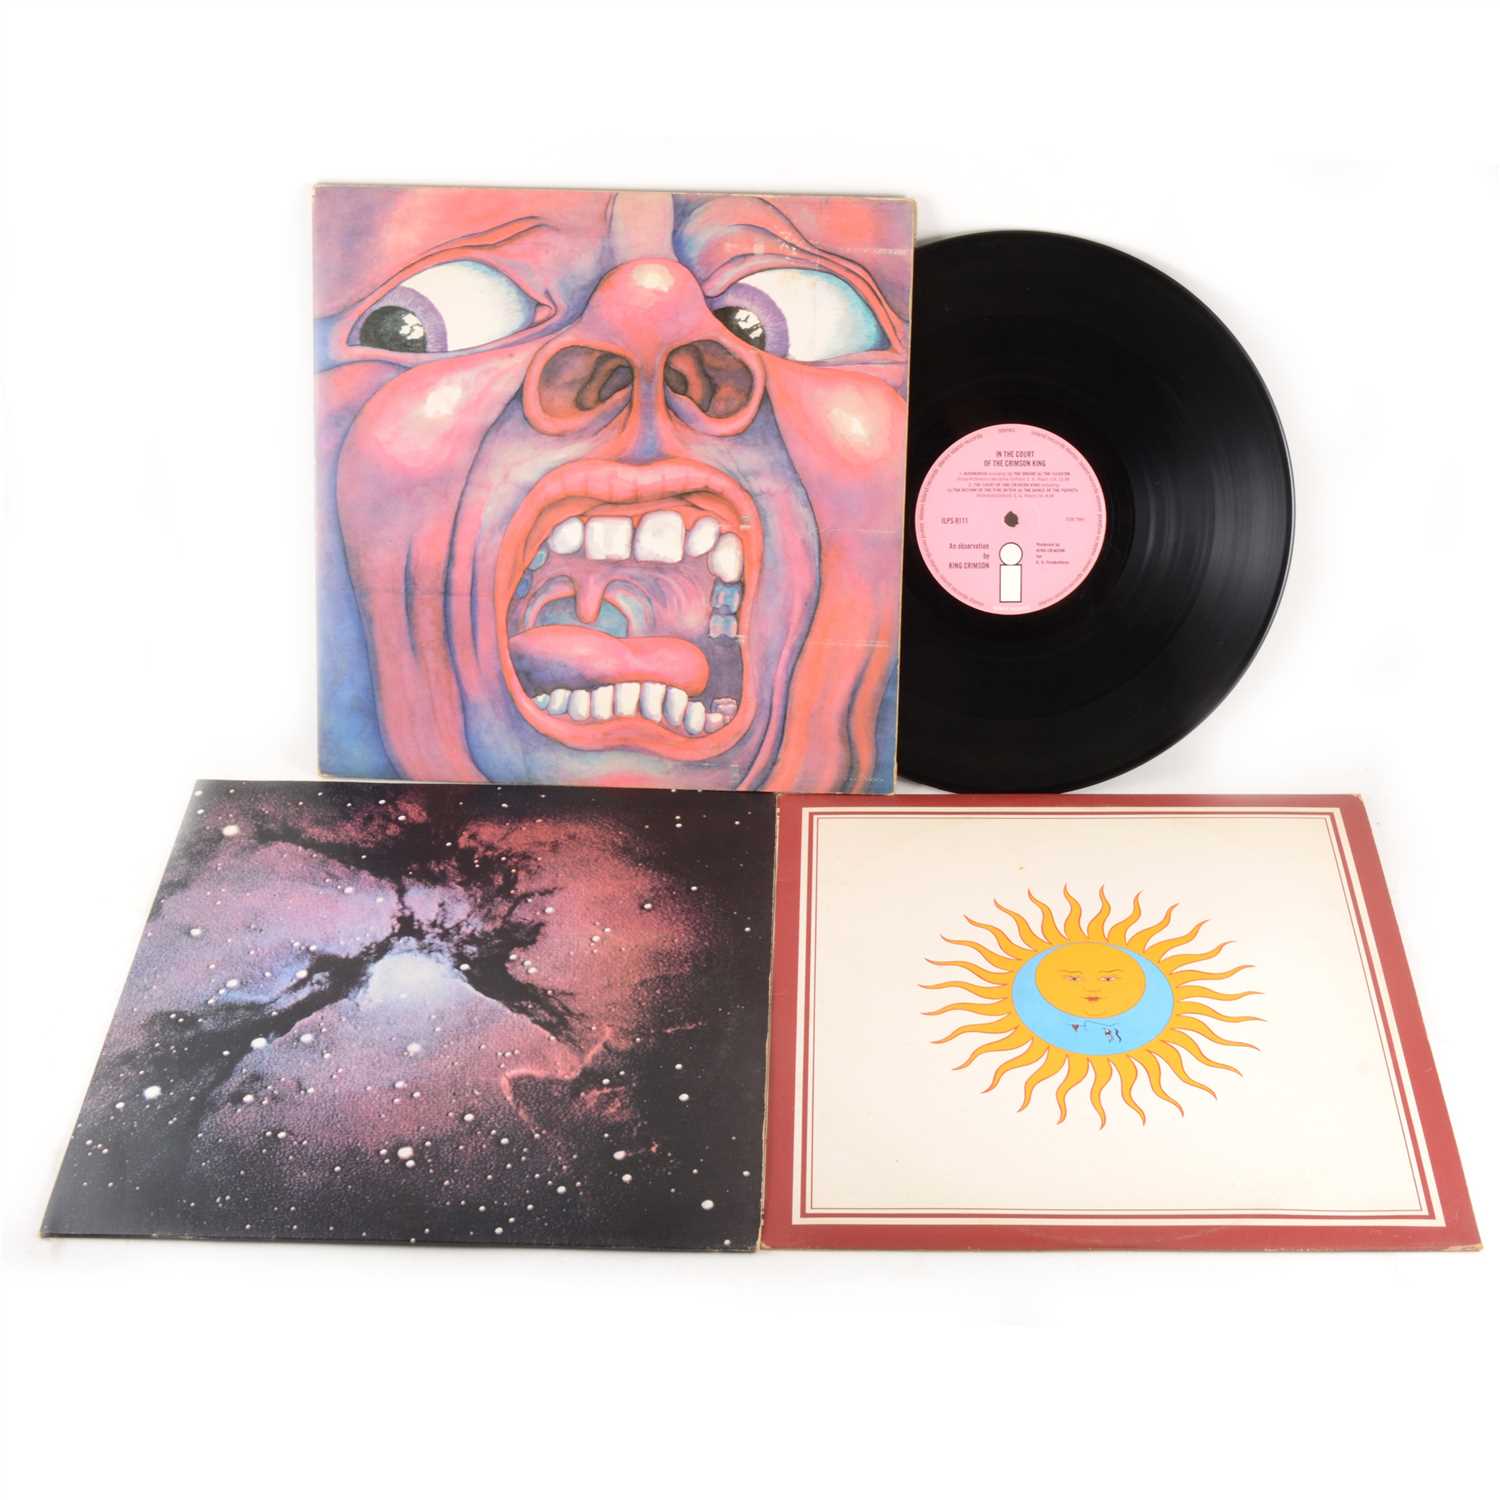 Lot 668 King Crimson; three vinyl LP records, In the